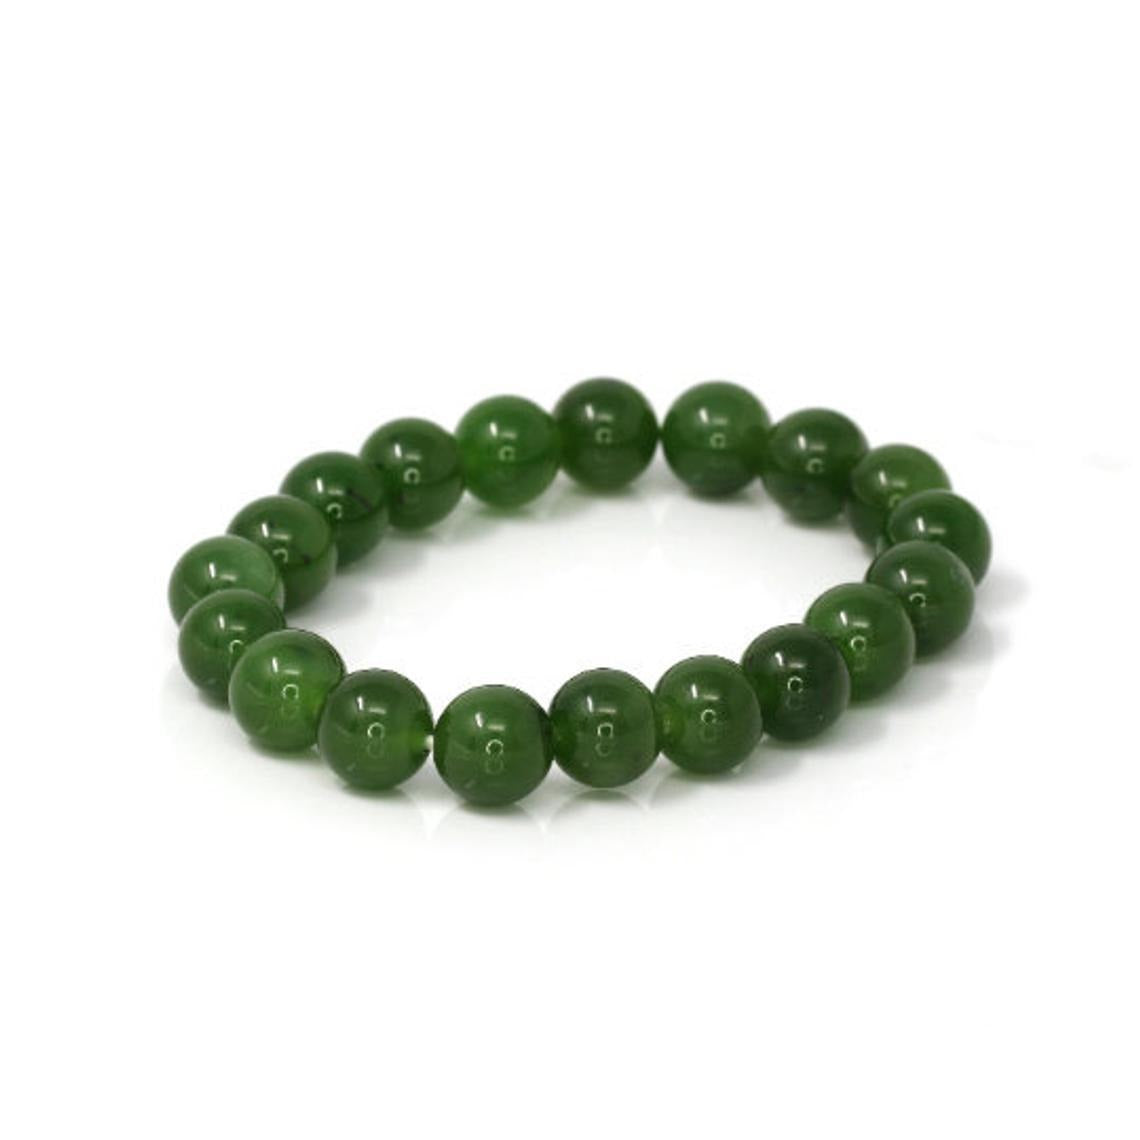 Buy RARE Green Jade Bead Bracelet BIG Carved Bright Green Beads Grade A  Jadeite burmese Jade Online in India - Etsy